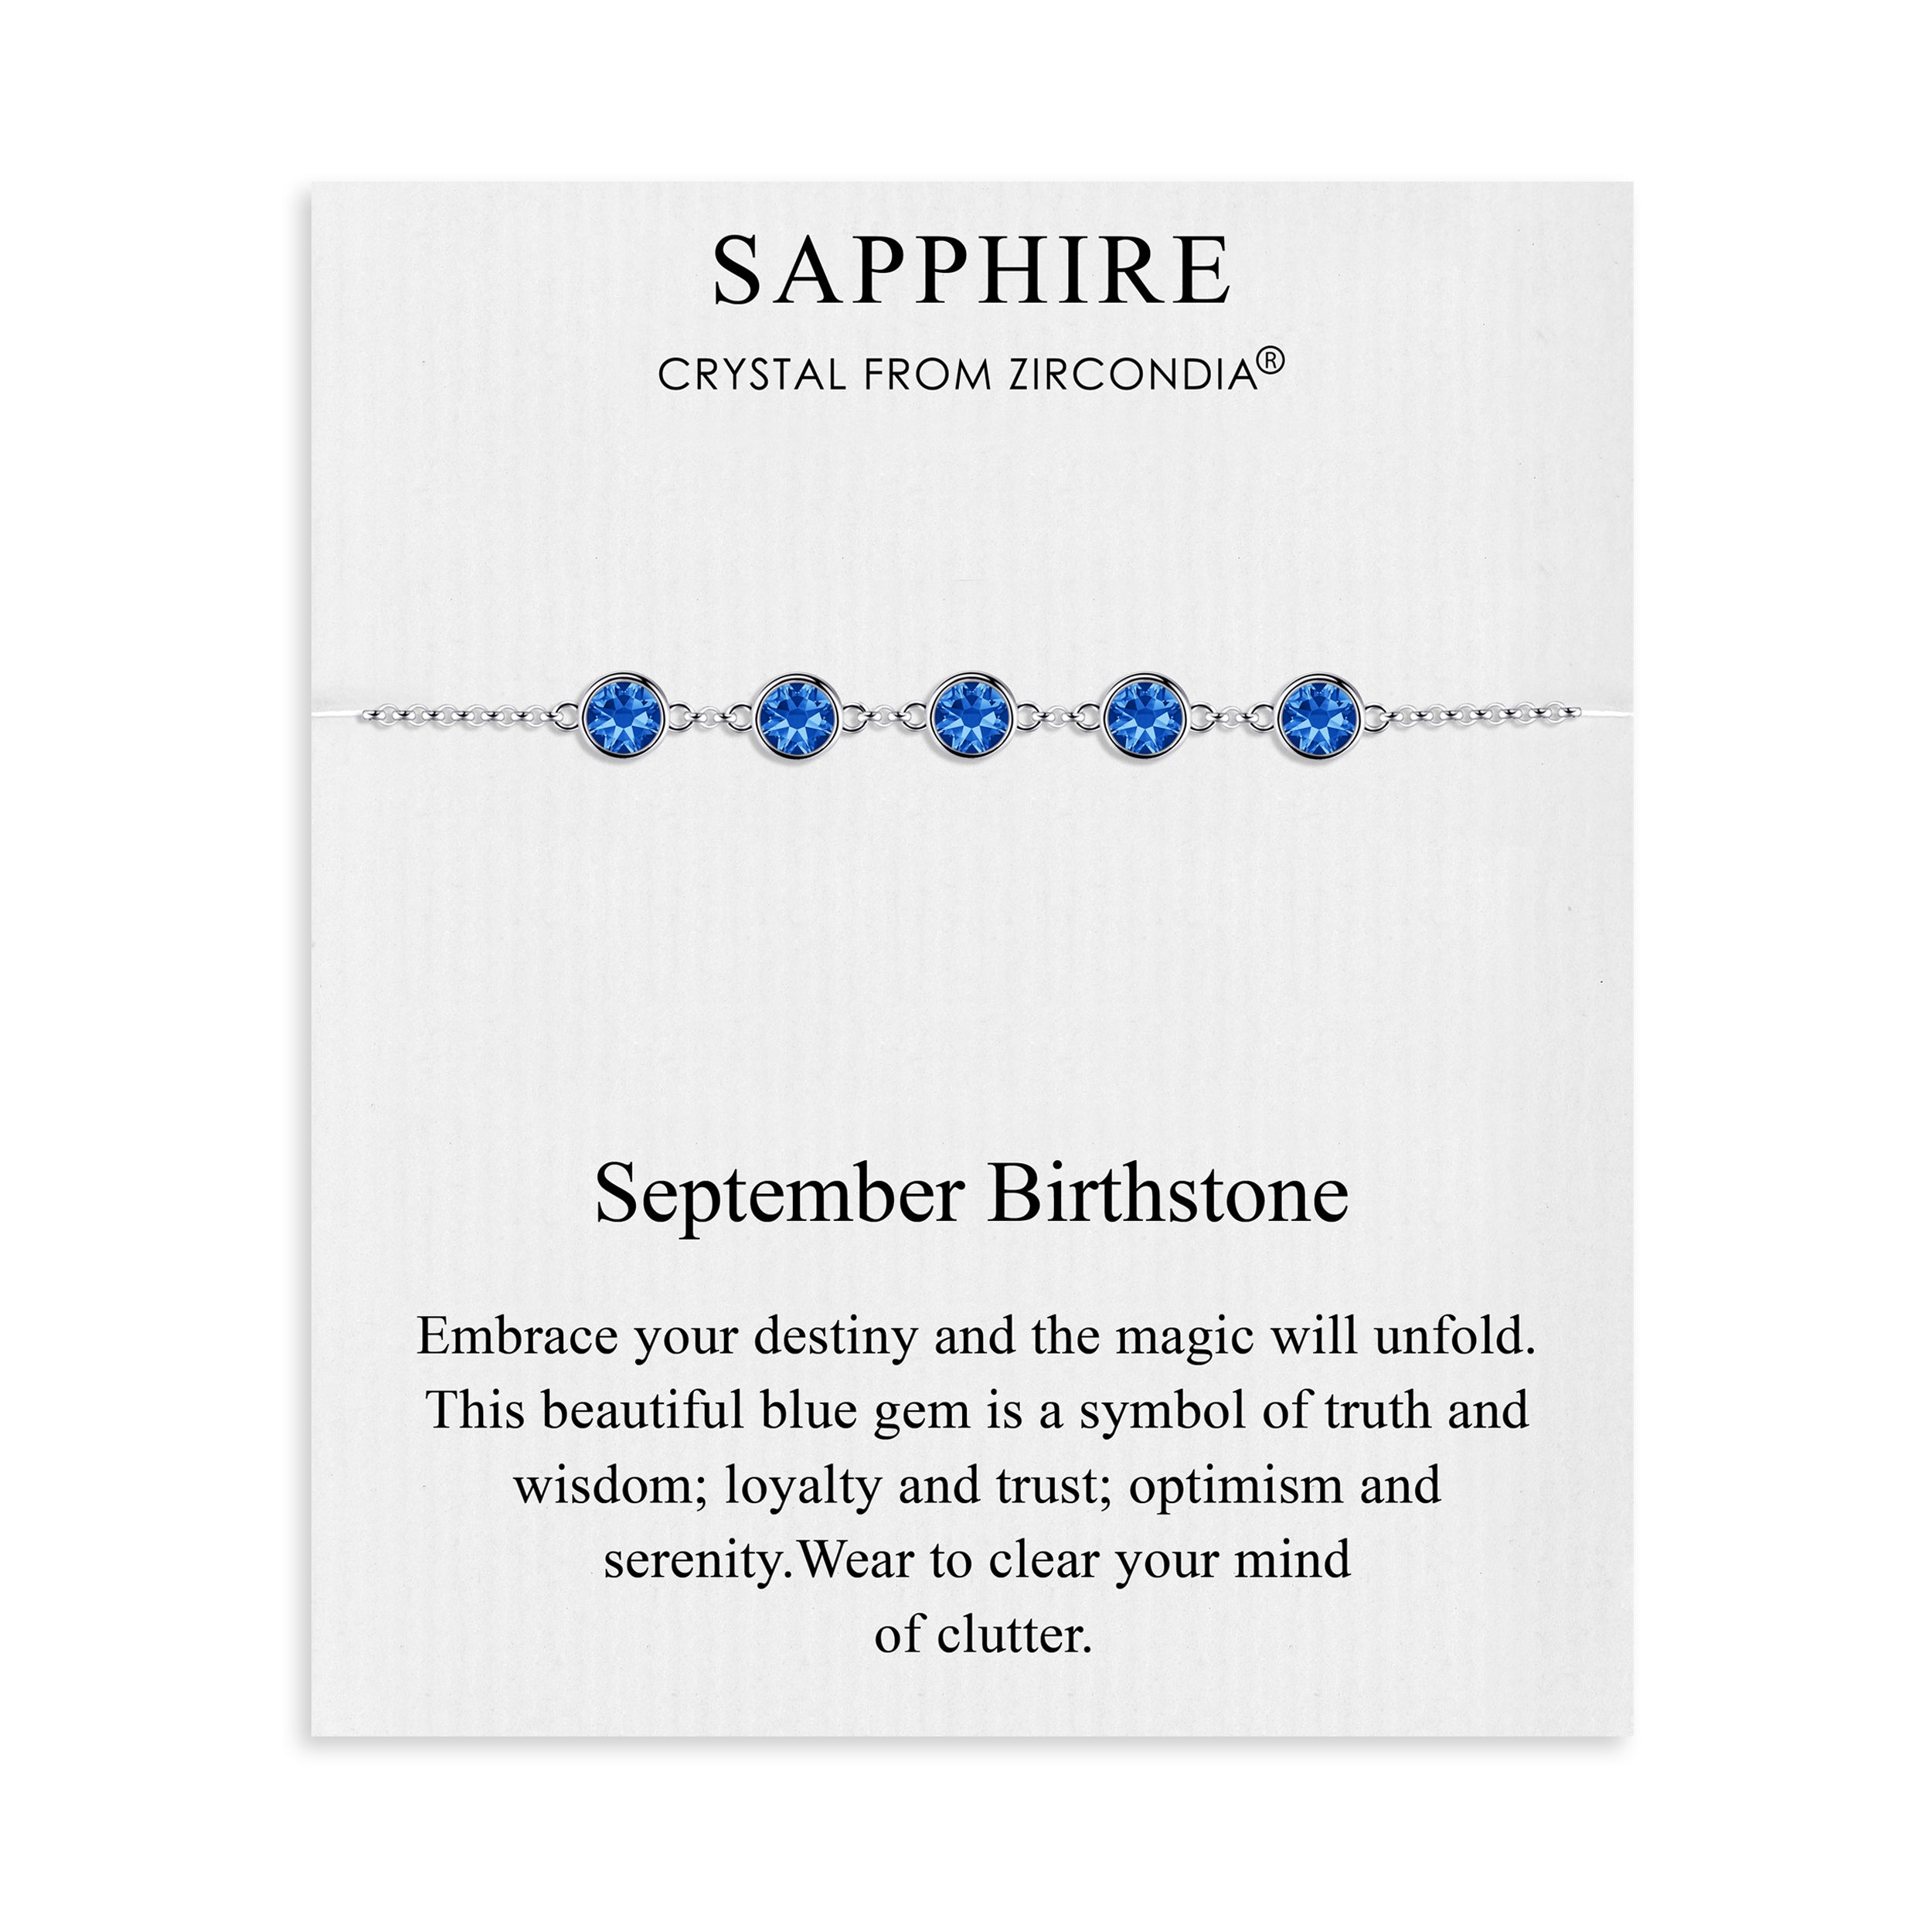 September Birthstone Bracelet Created with Sapphire Zircondia® Crystals by Philip Jones Jewellery